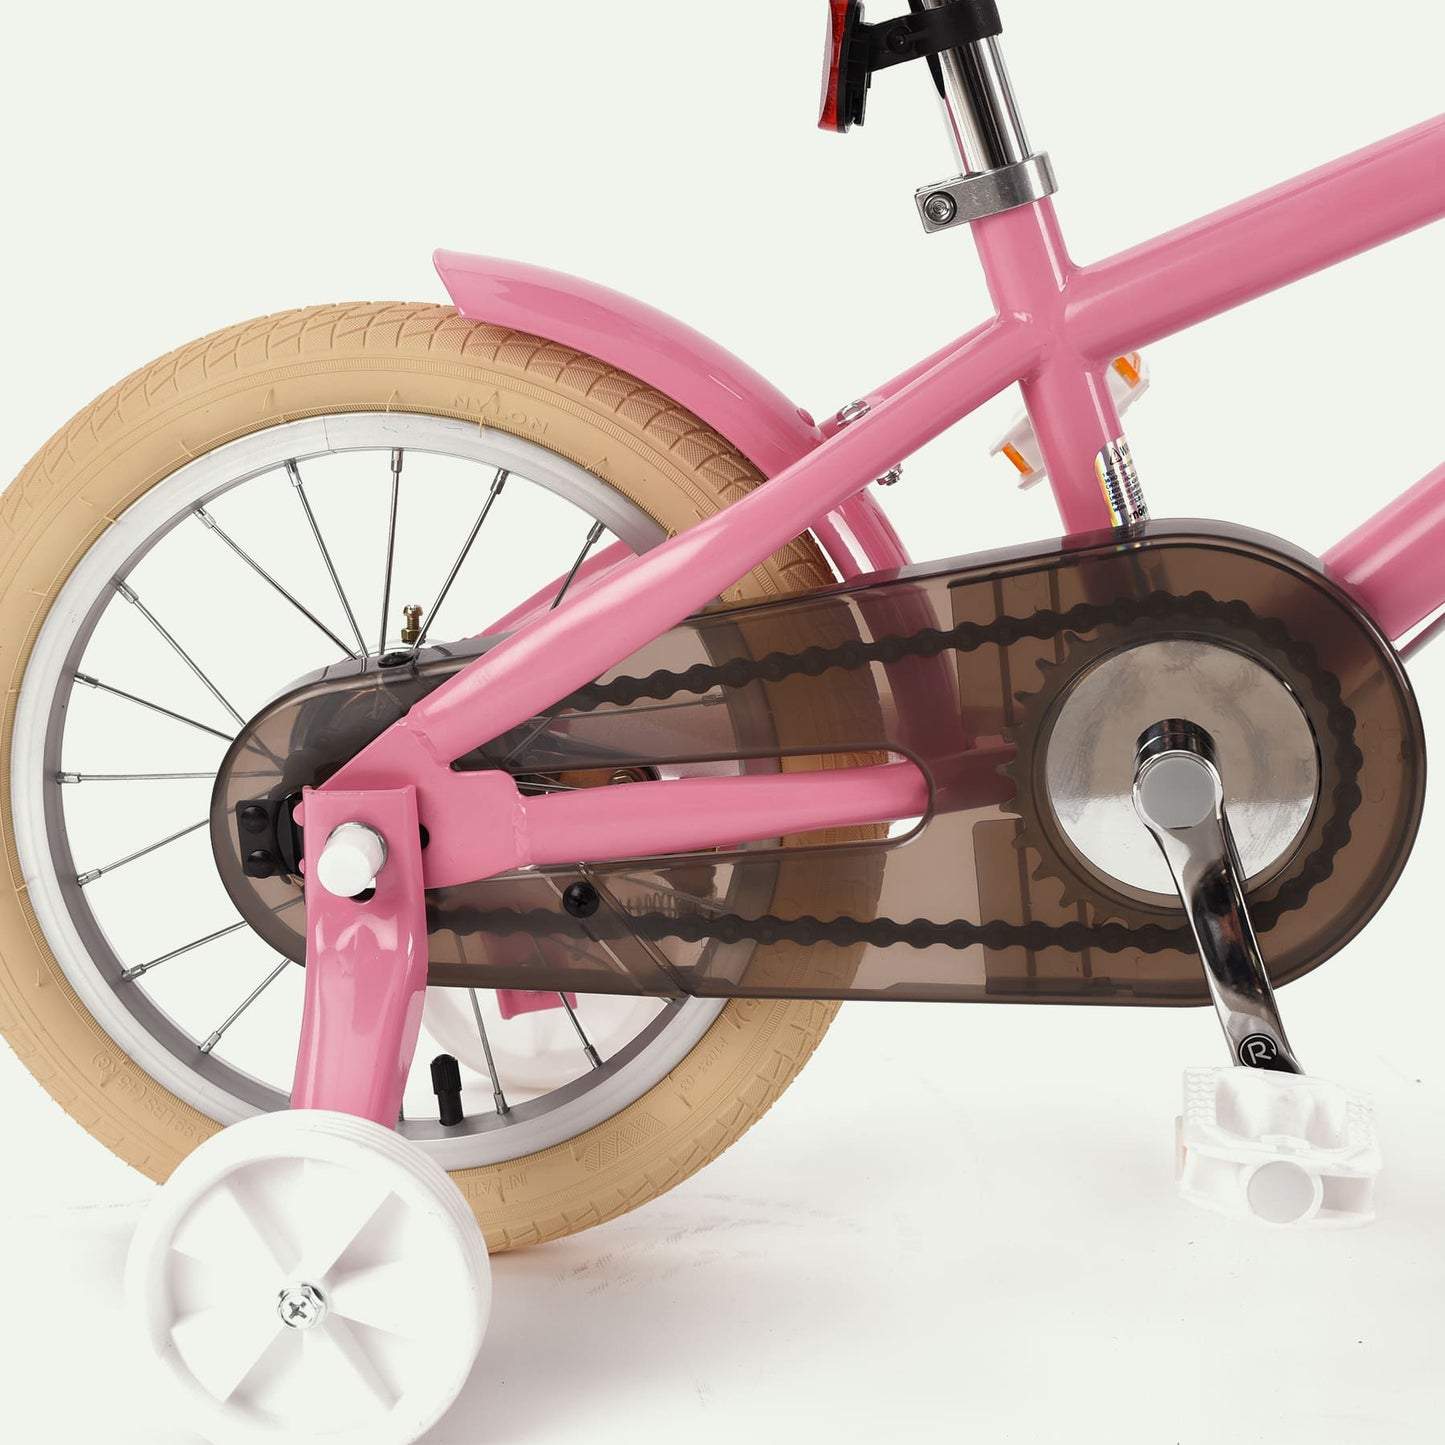 18 inch girls bike with training wheels